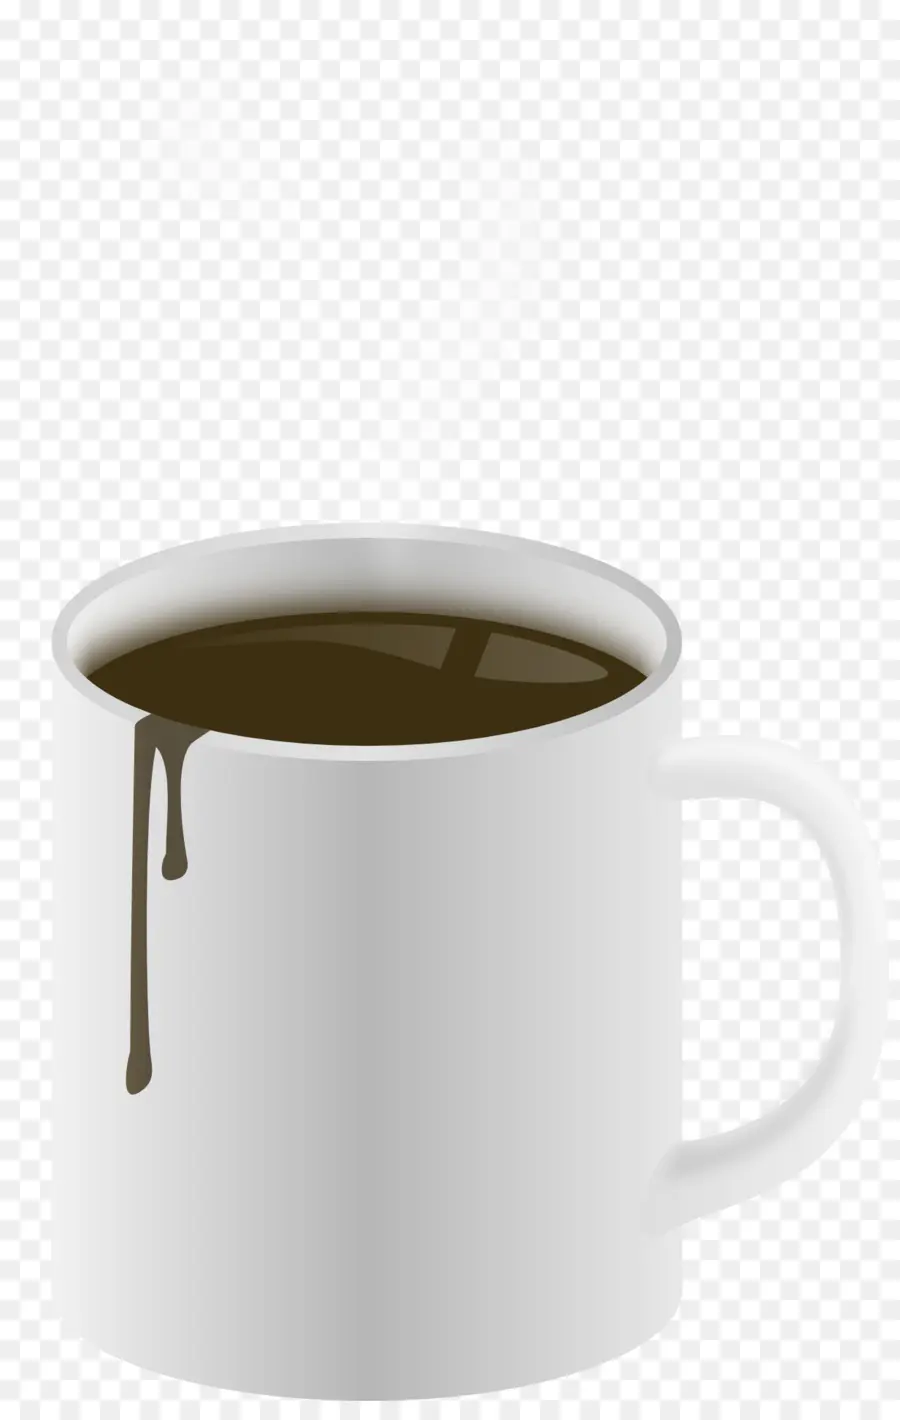 Kahve，çay PNG